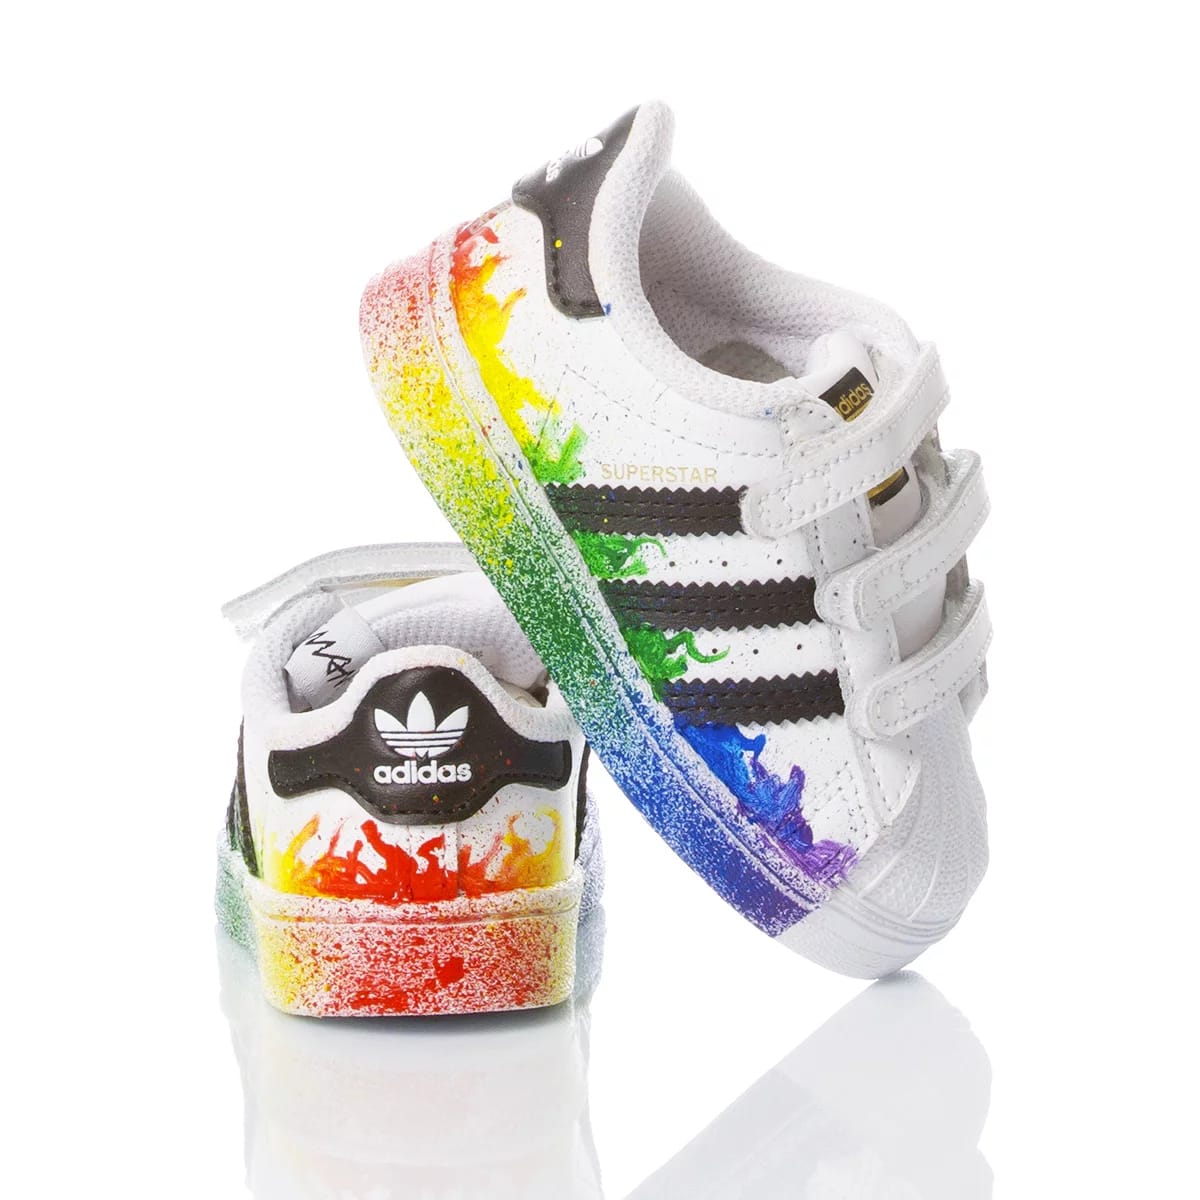 Shop Mimanera Adidas Baby: Customize Your Little Shoe!